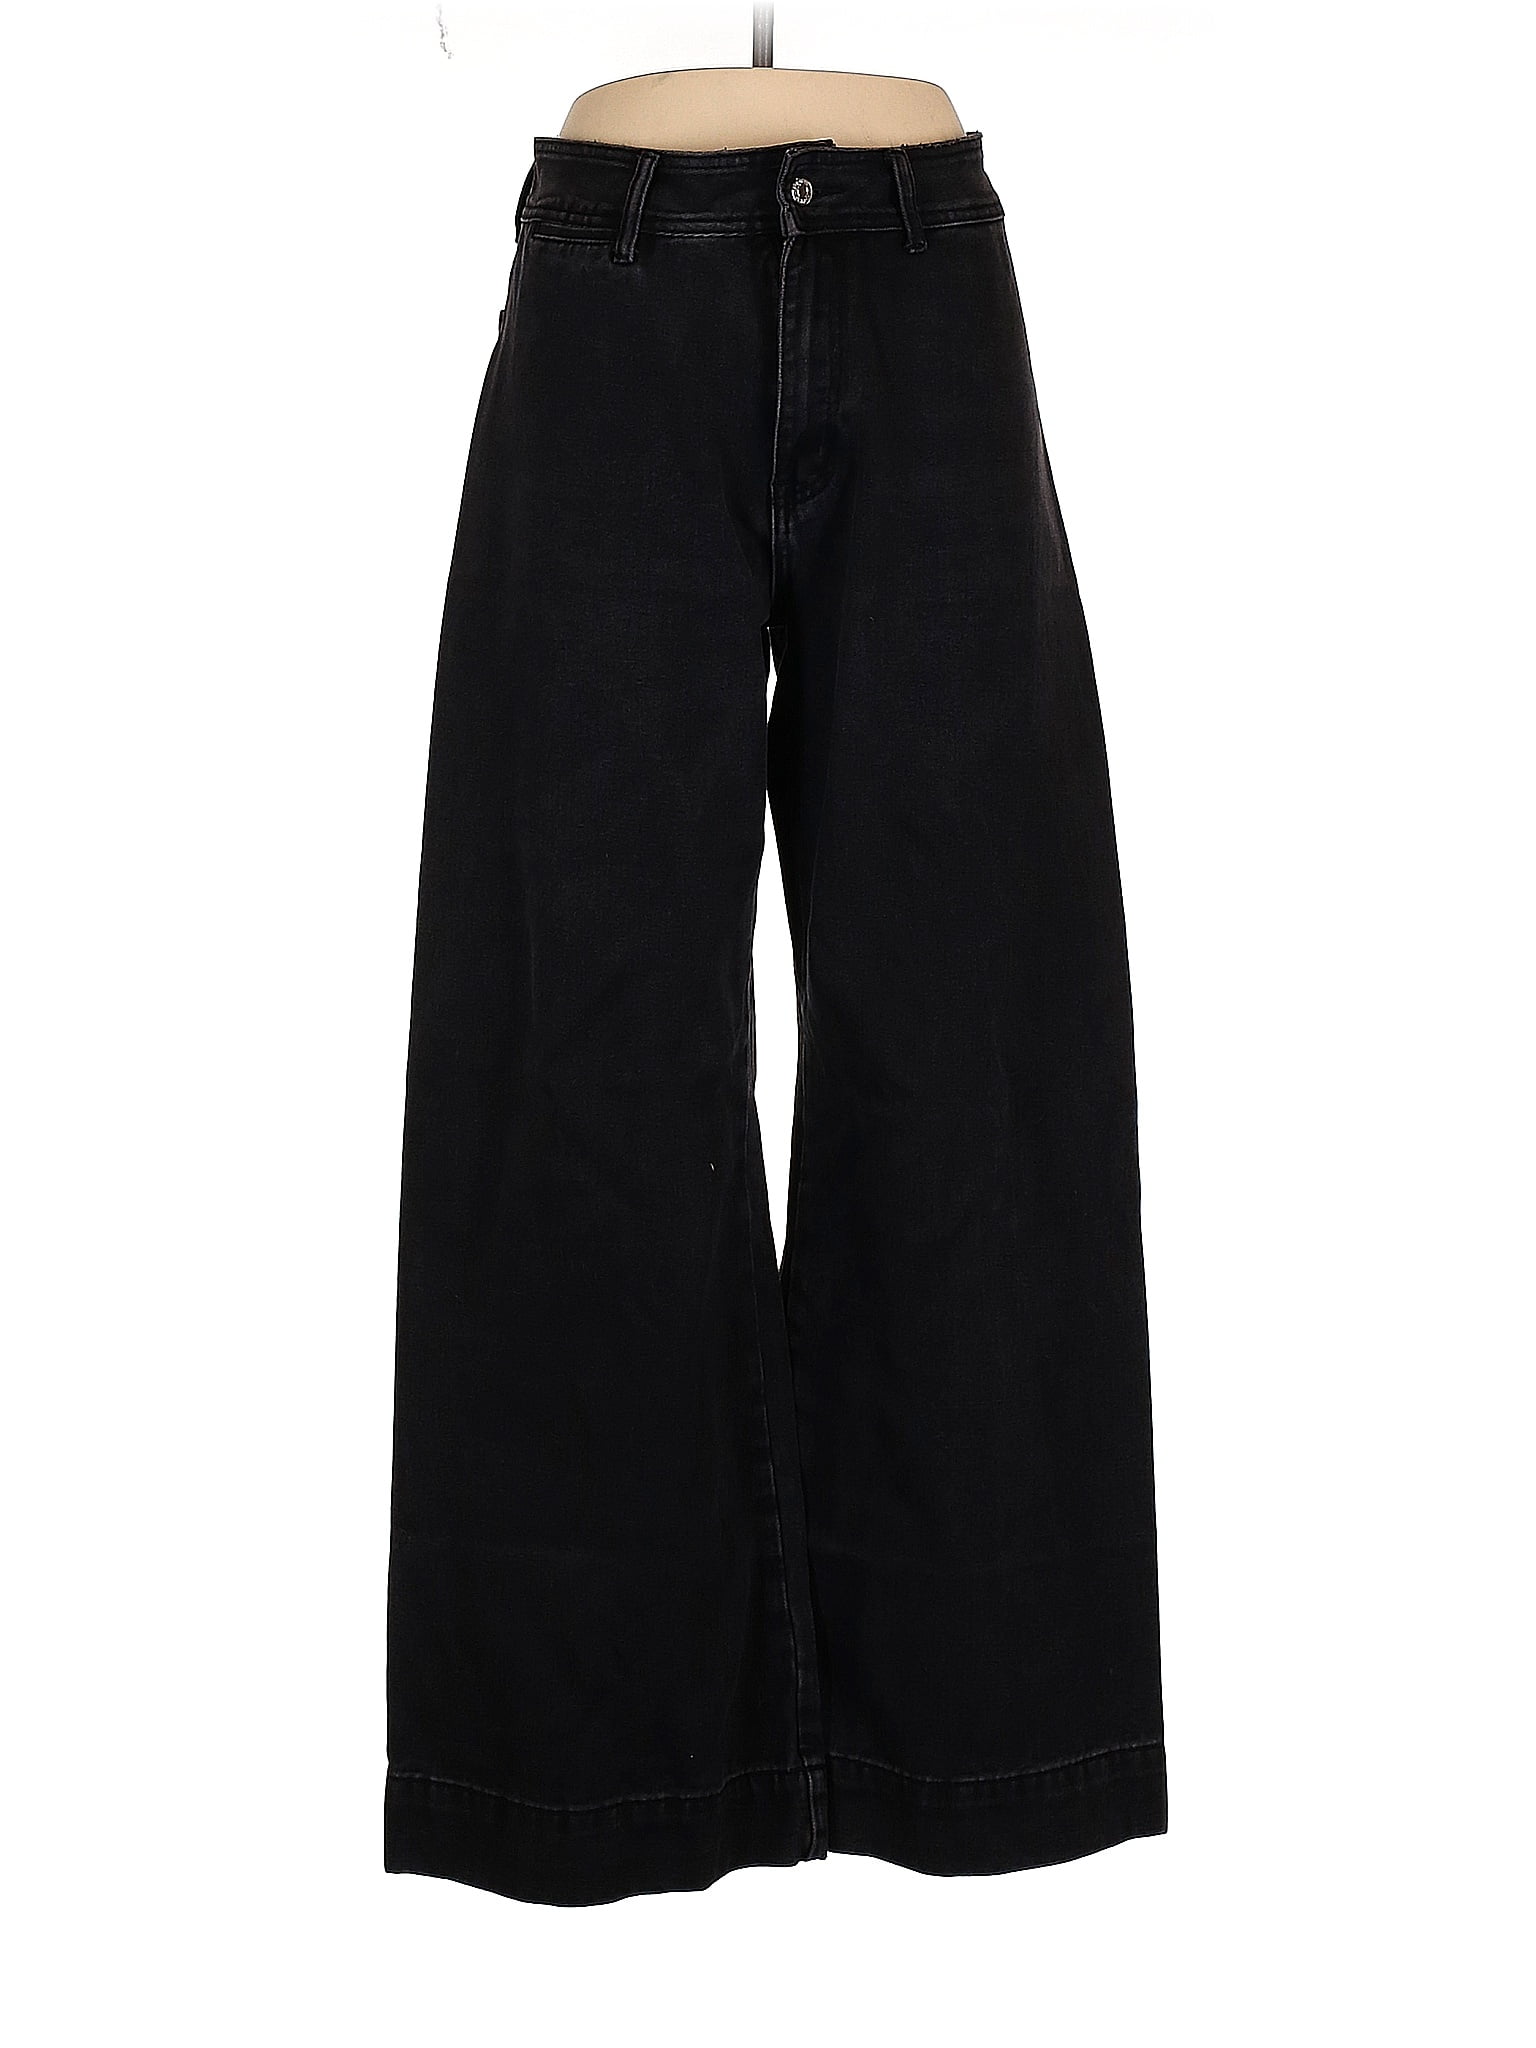 Shein Black Jeans Size L - 40% off | thredUP